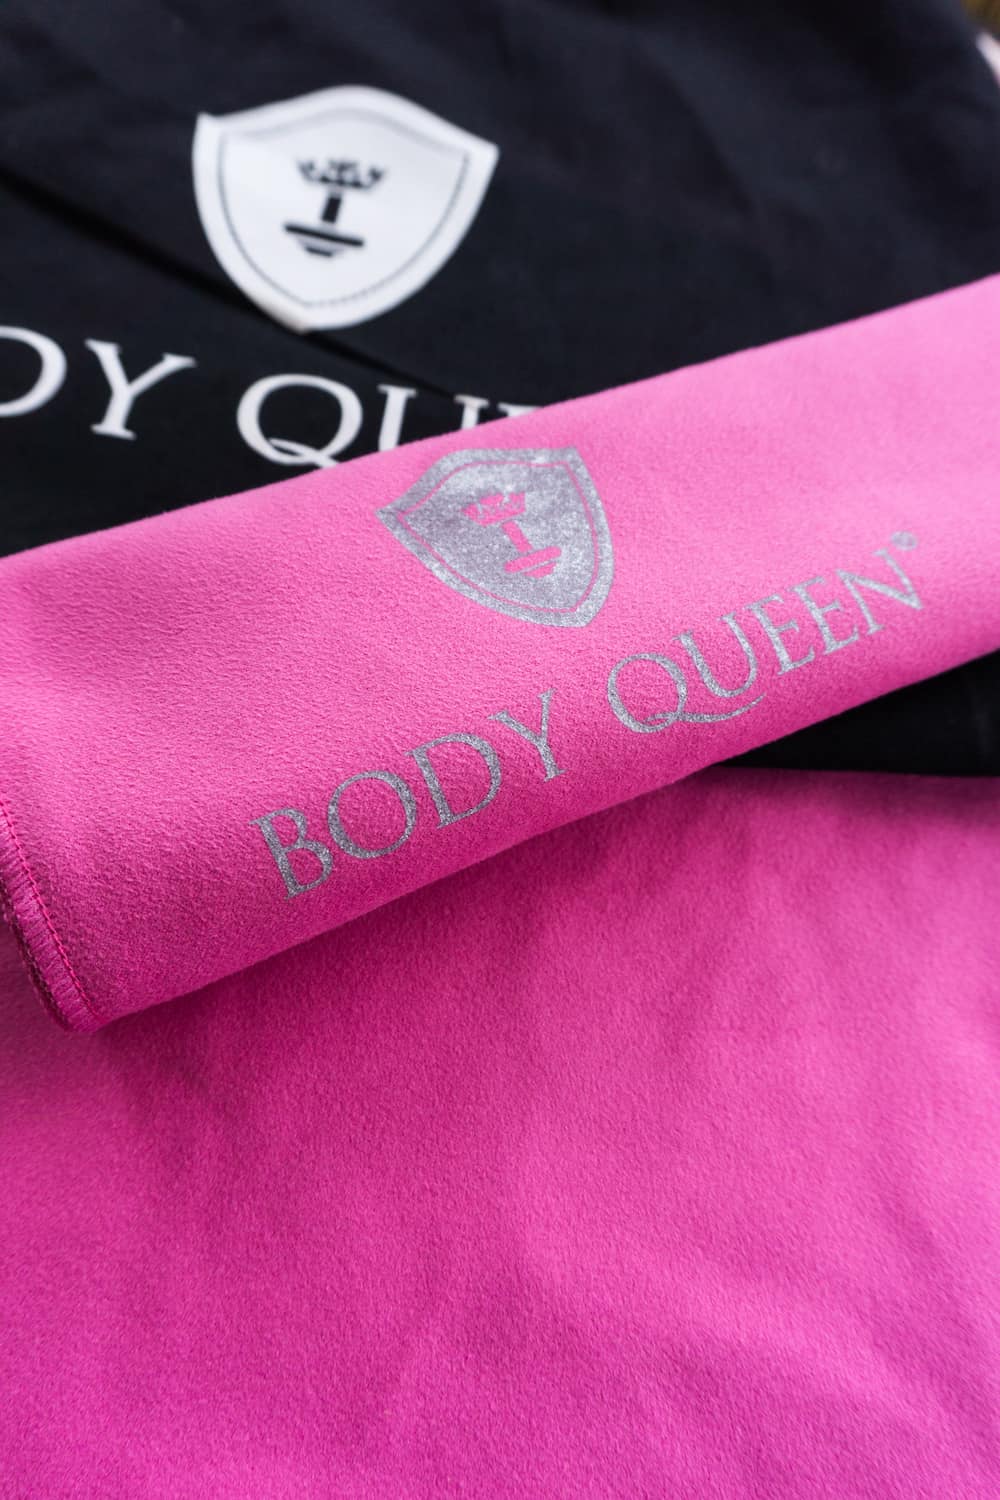 Body Queen Gym Bag Fitness Towel 